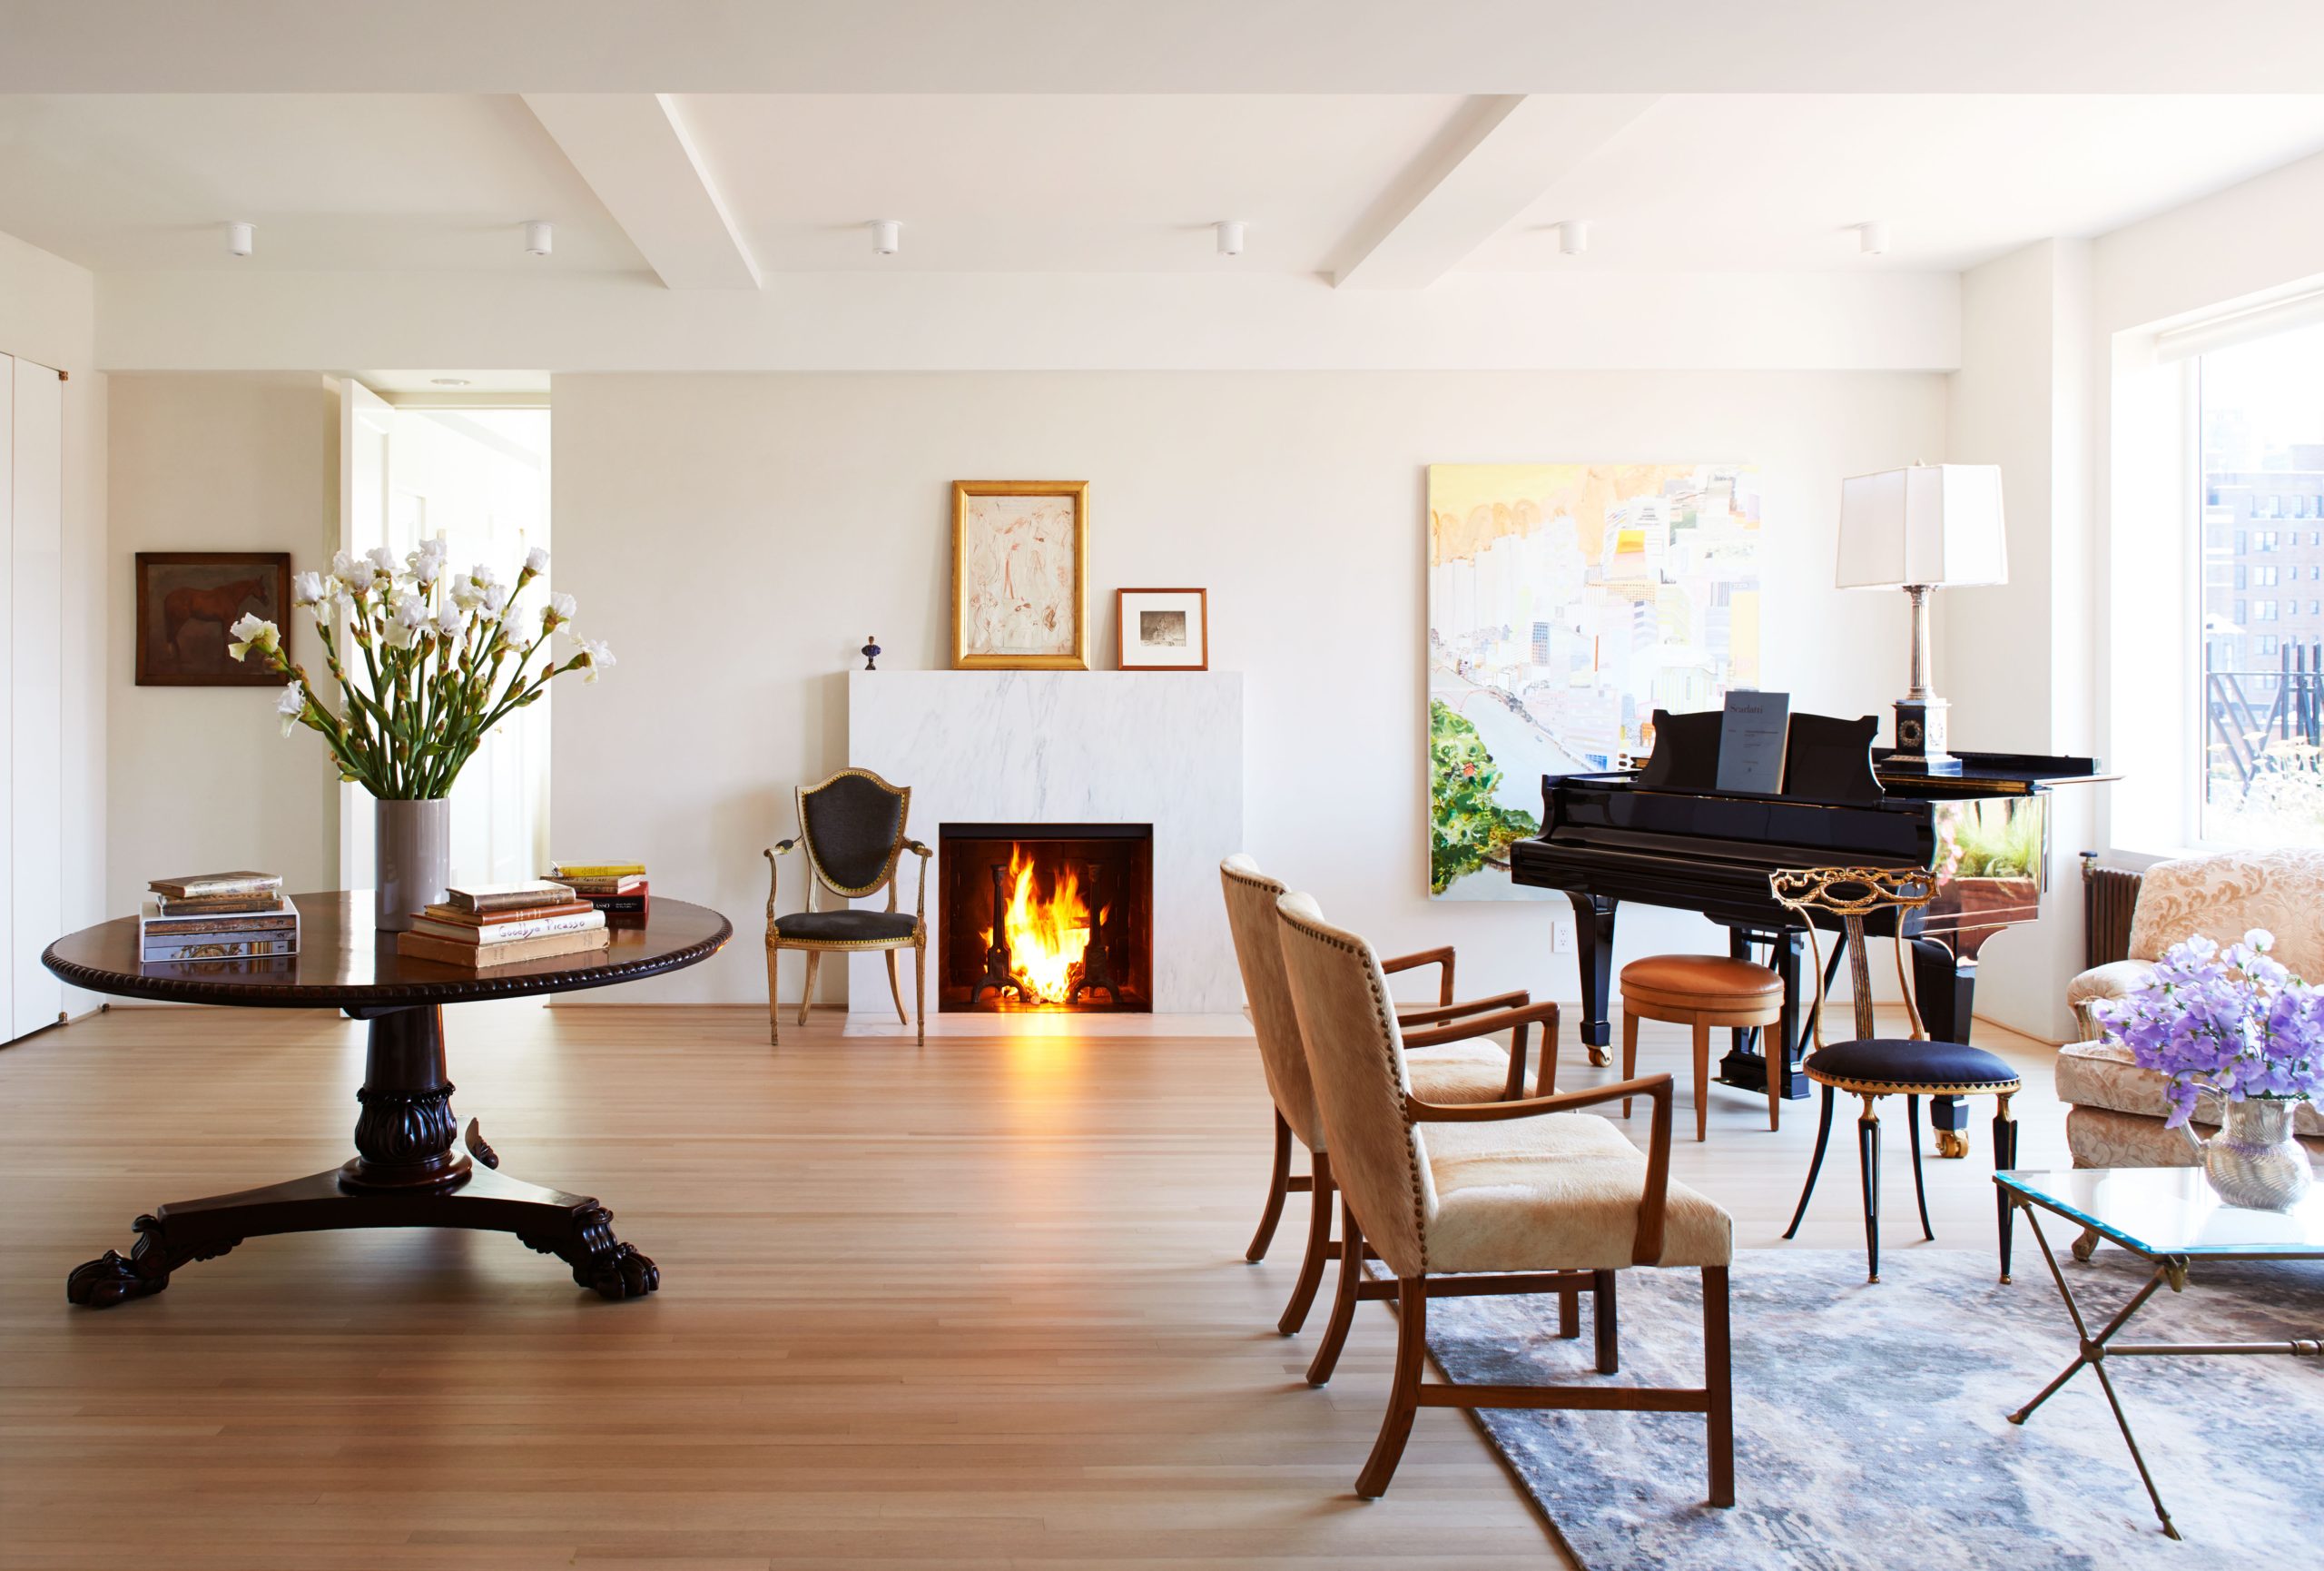 The living room of Isaac Mizrahi's New York apartment